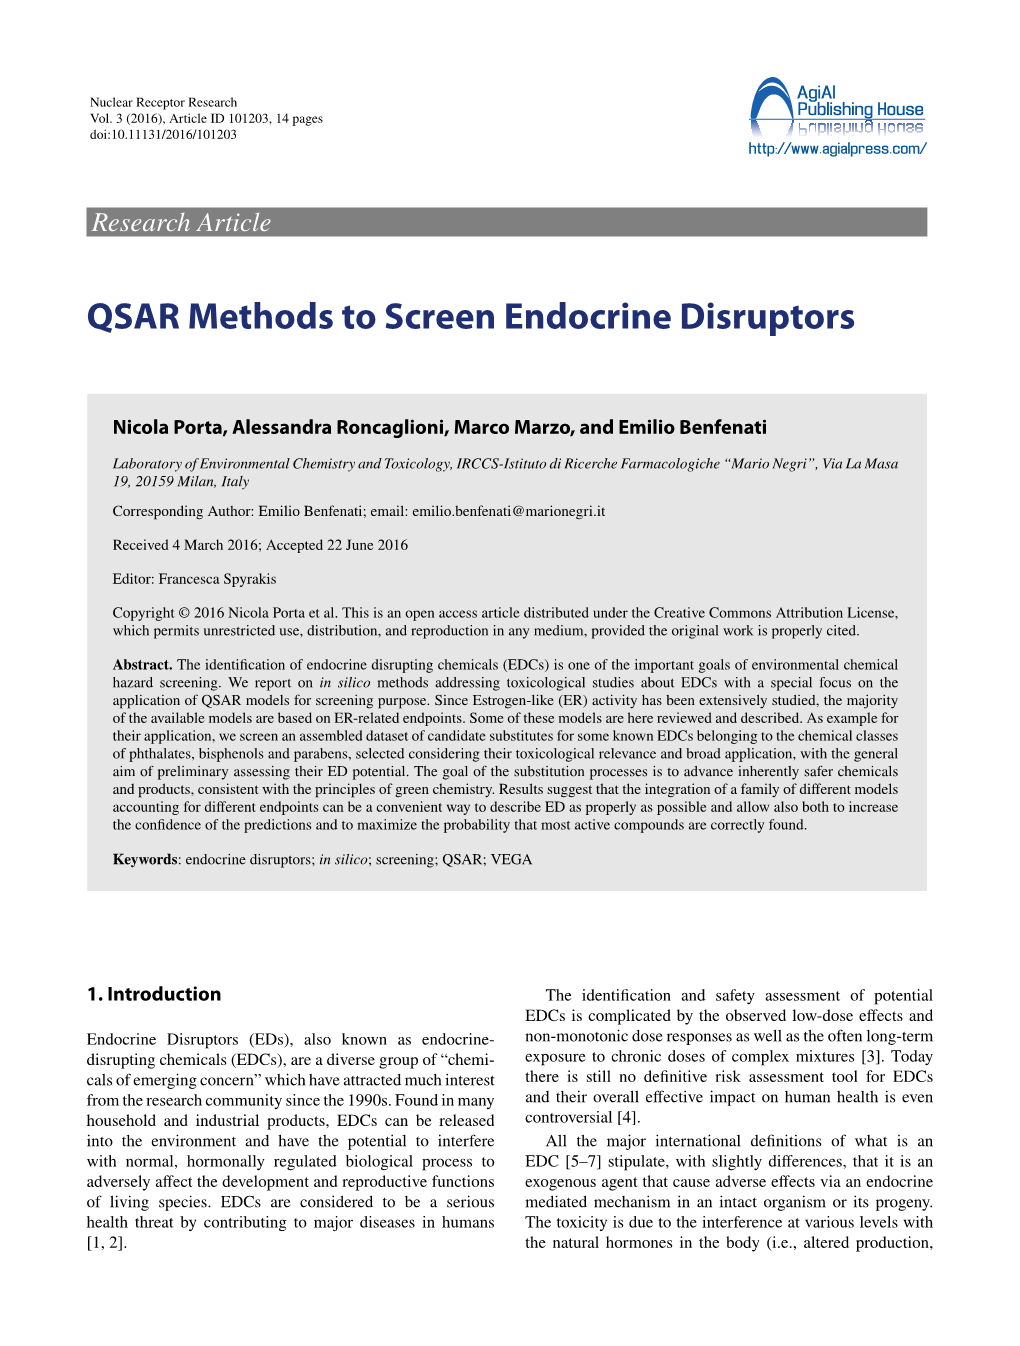 QSAR Methods to Screen Endocrine Disruptors